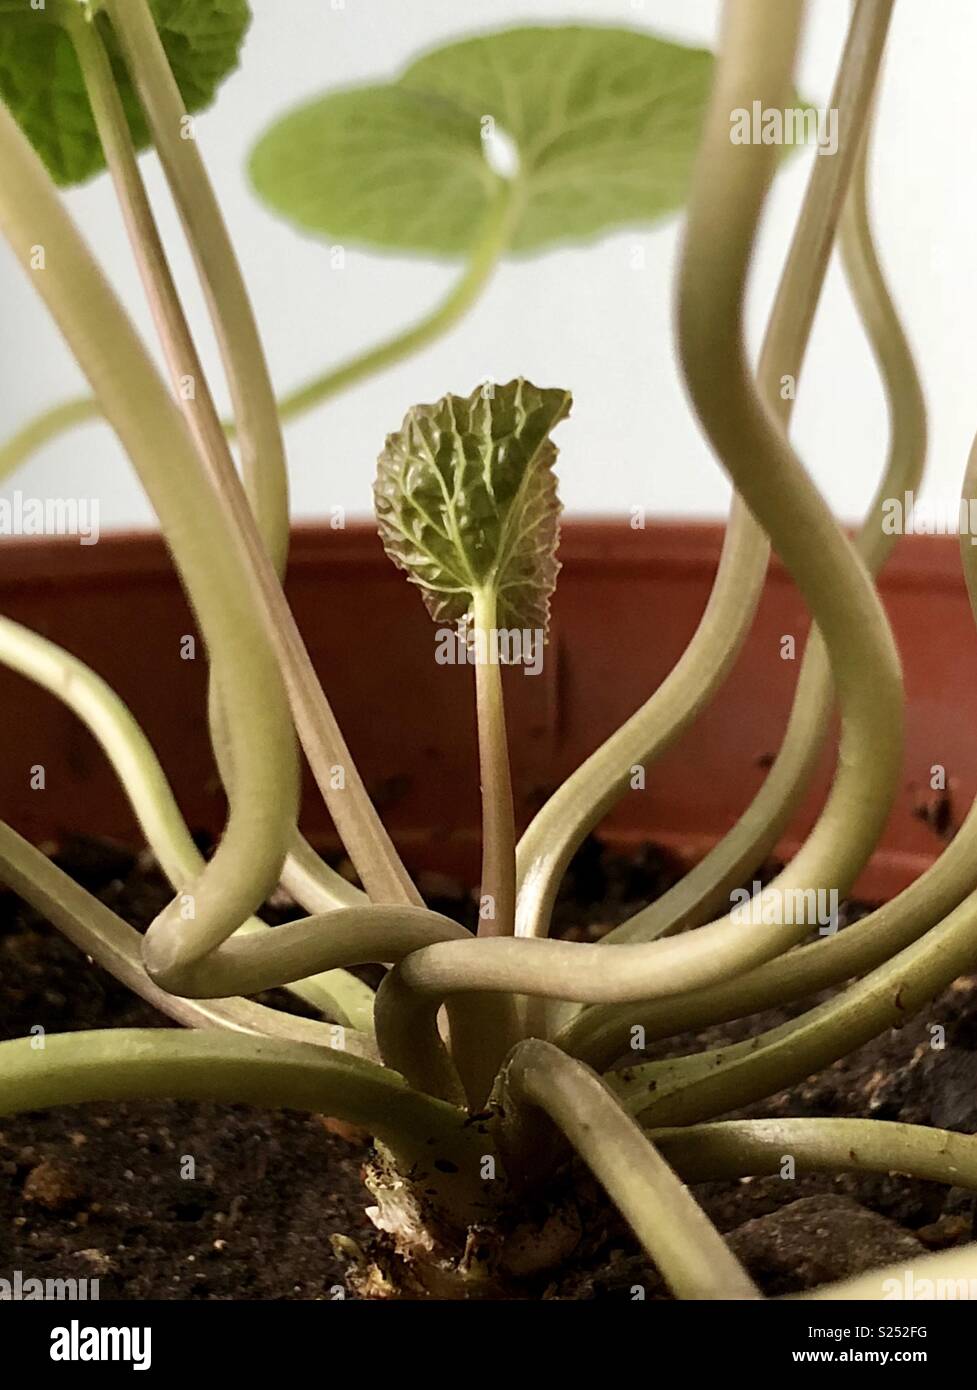 Wasabi Pflanze neue Blätter im Topf Stockfotografie - Alamy